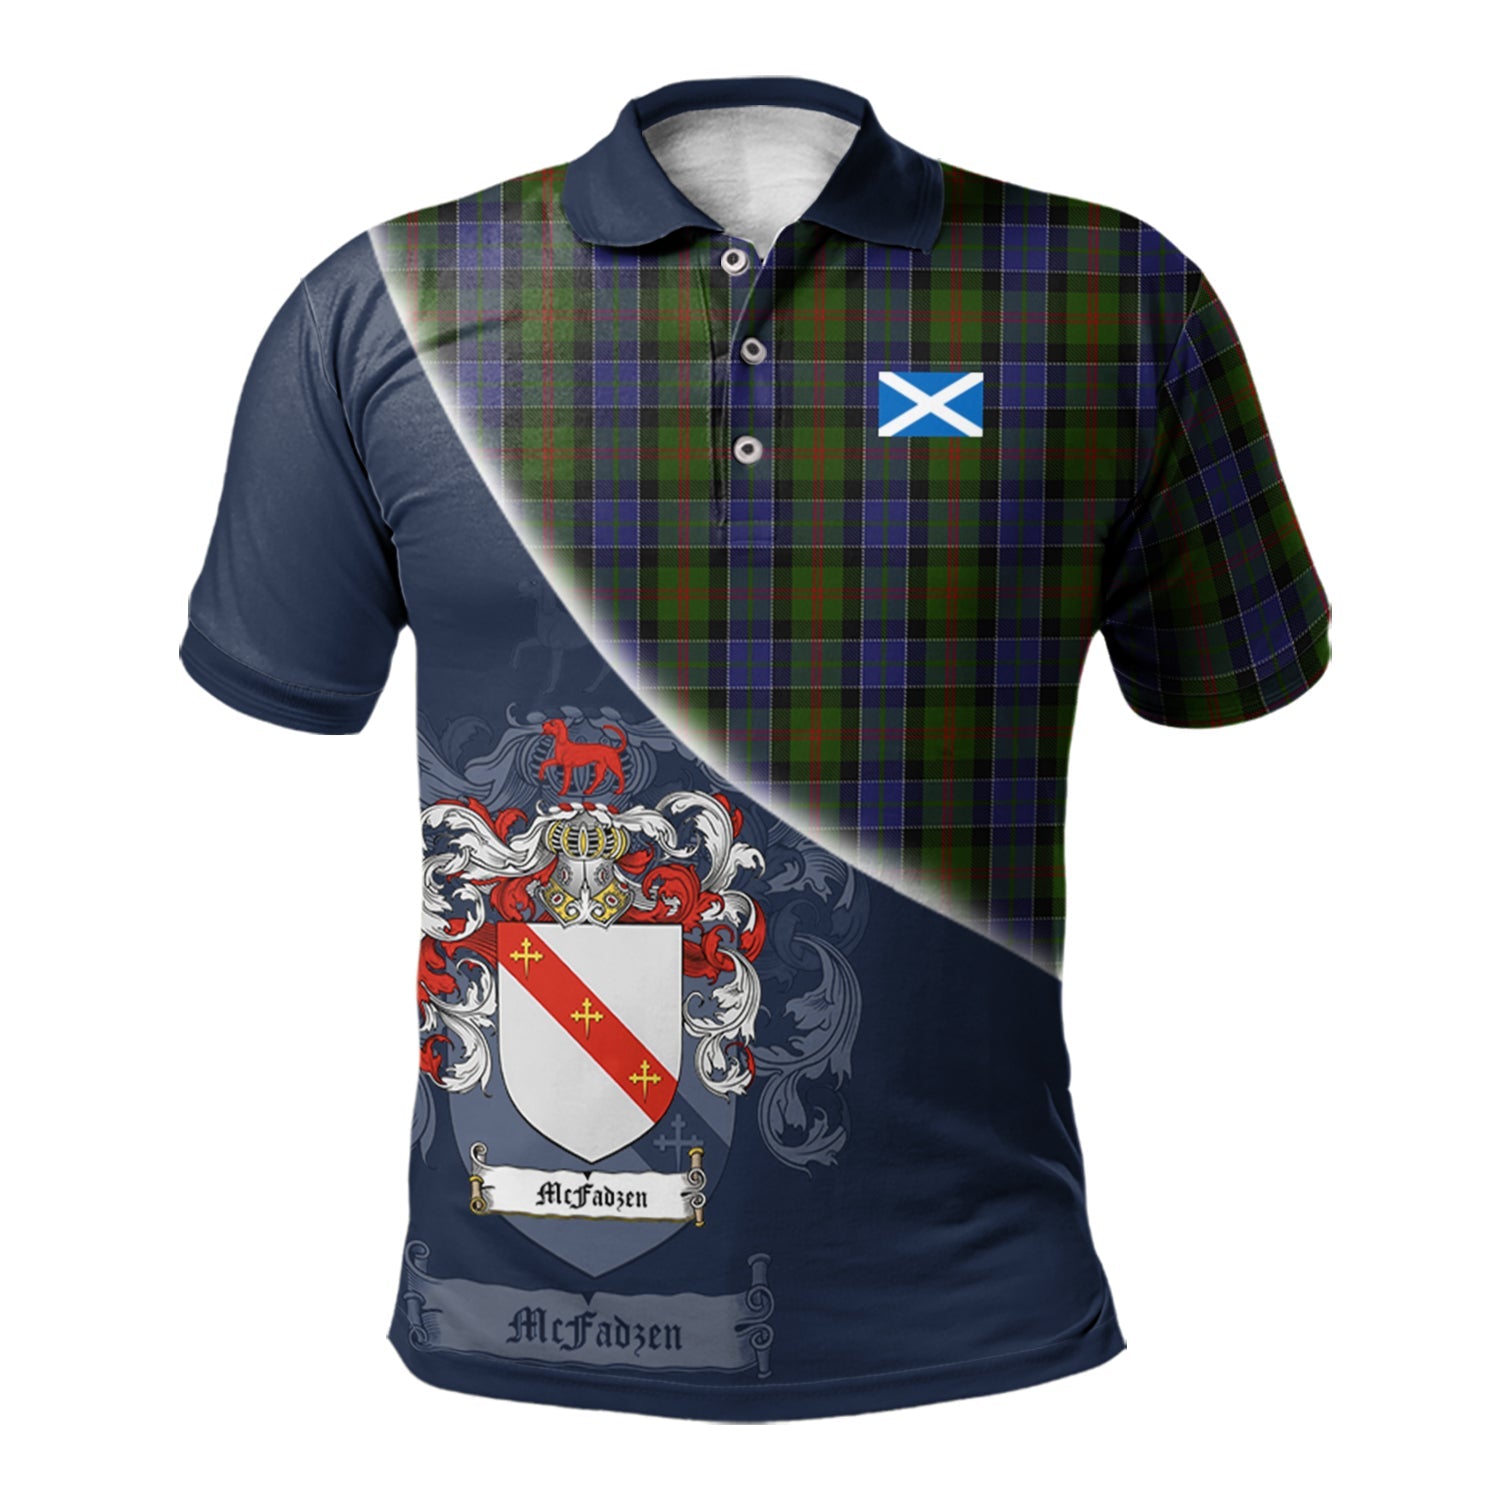 scottish-mcfadzen-03-clan-crest-tartan-scotland-flag-half-style-polo-shirt